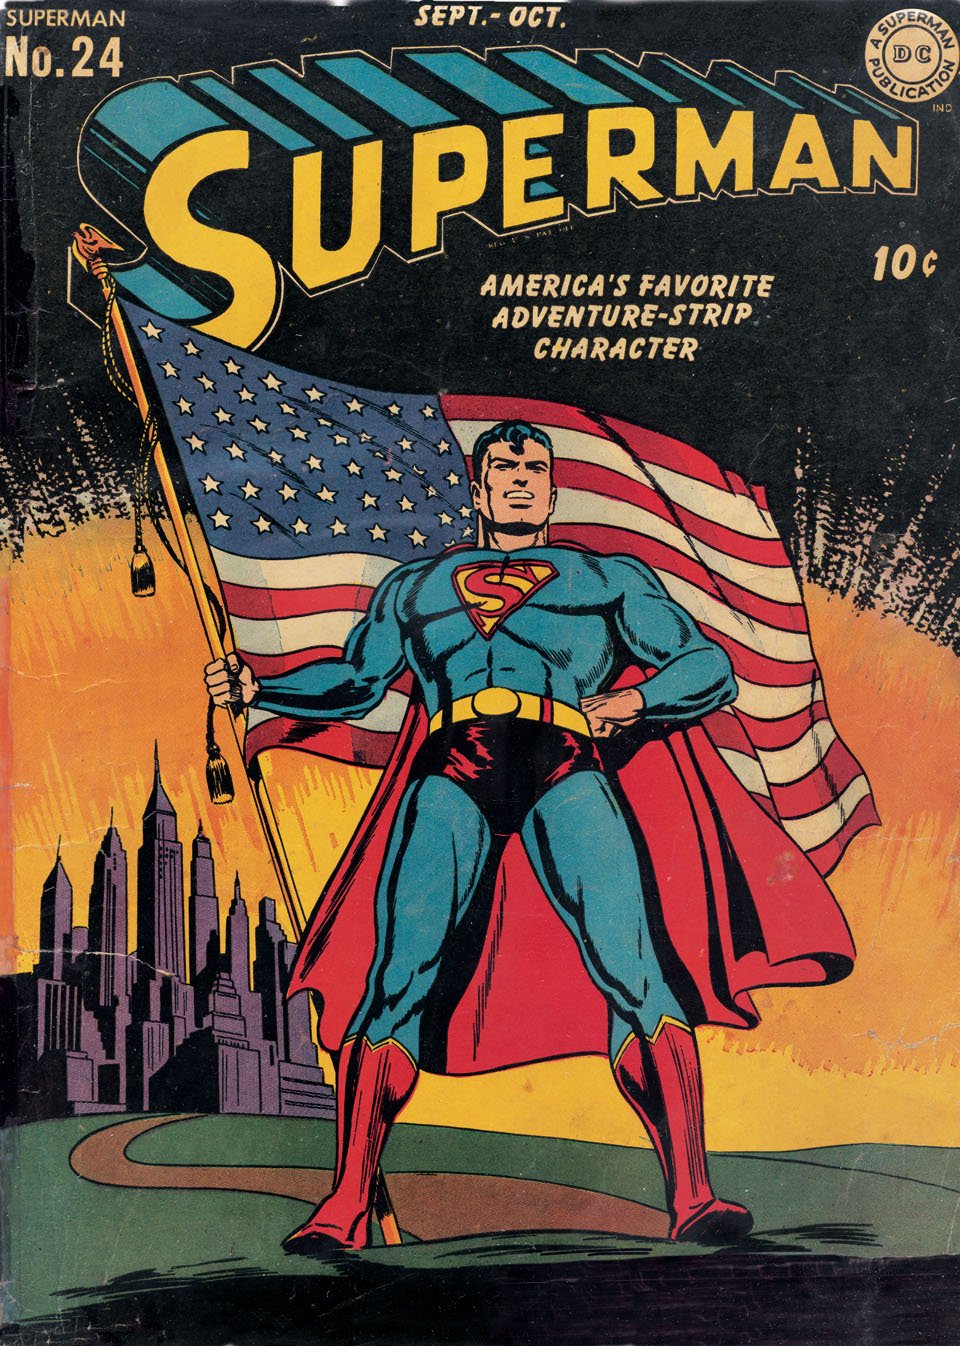 Superman No. 24. || Cover art, Jack Burnley, September–October 1943. || Copyright: TM & (c) DC Comics. All rights reserved. (s13)